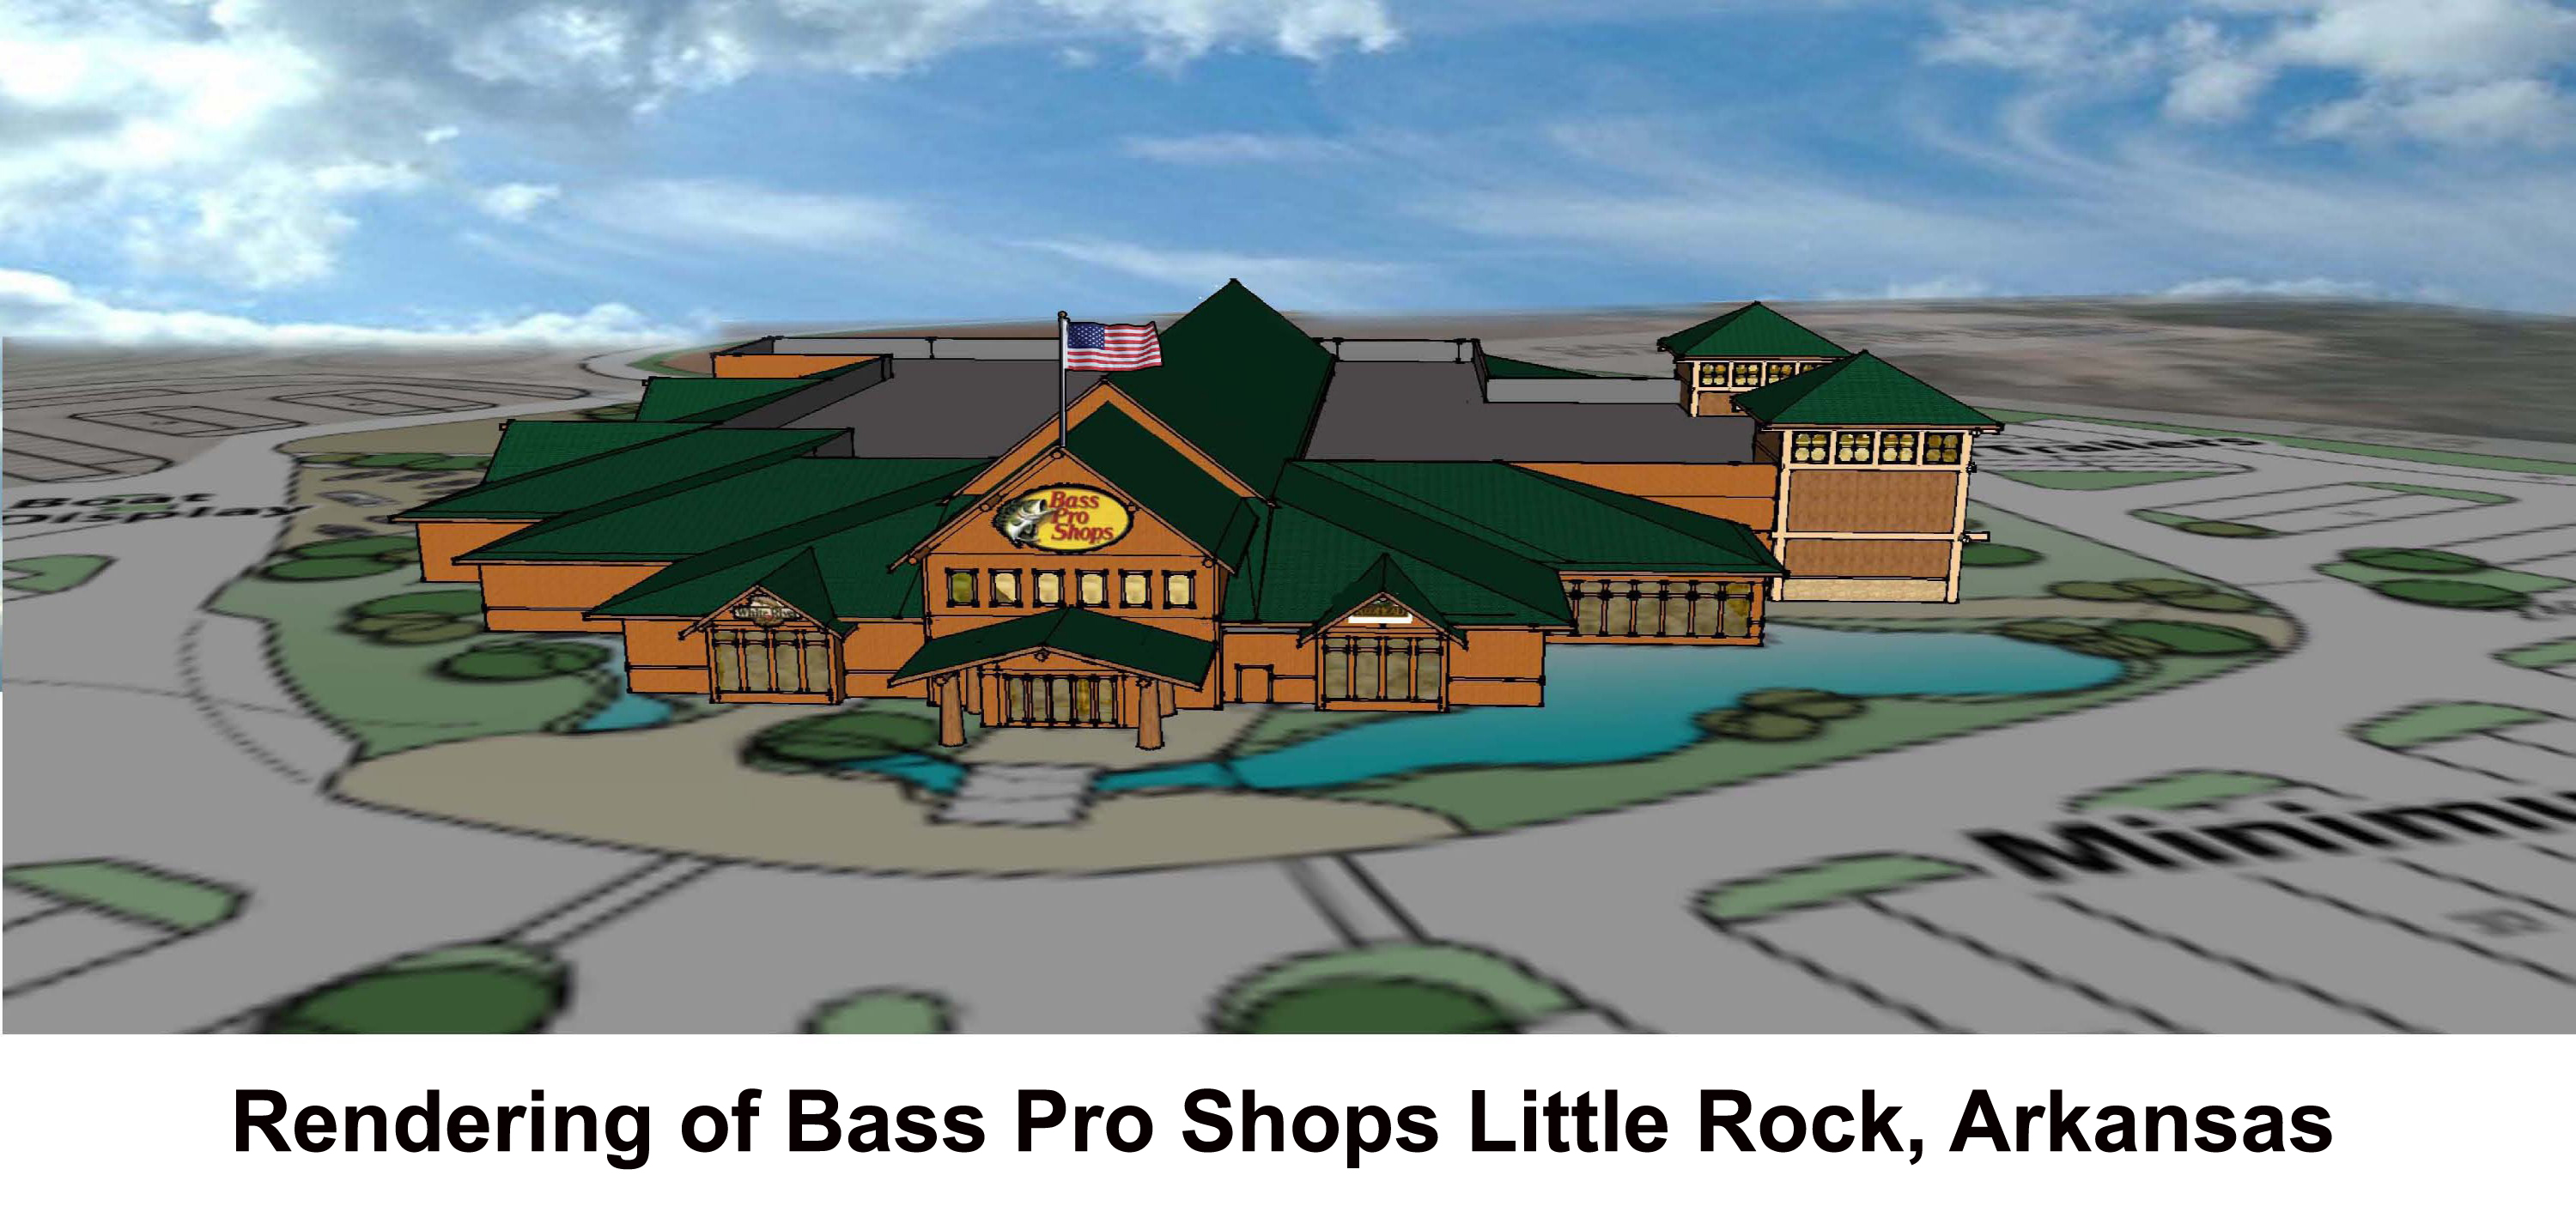 Little Rock, AR Sporting Goods & Outdoor Stores  Bass Pro Shops